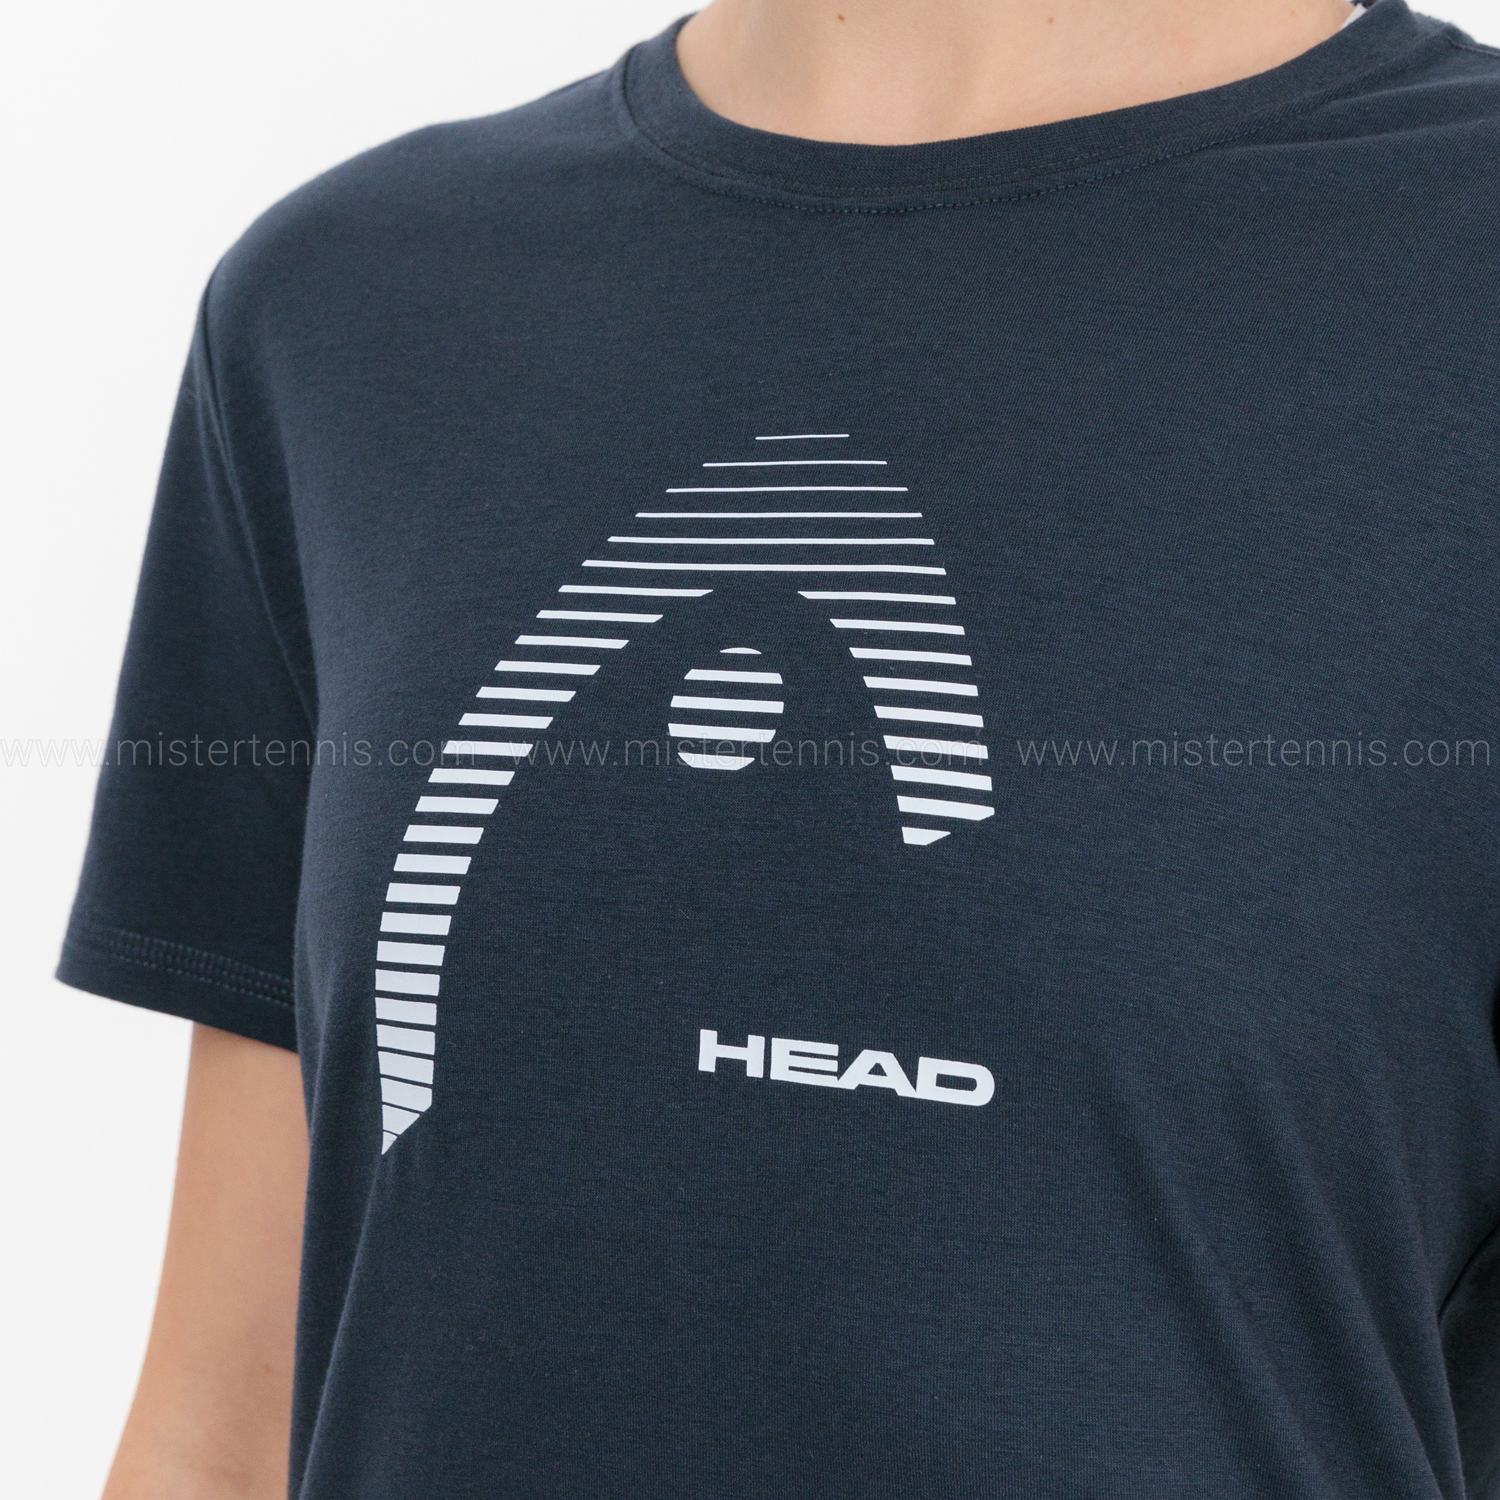 Head Club Lara Logo Camiseta - Navy